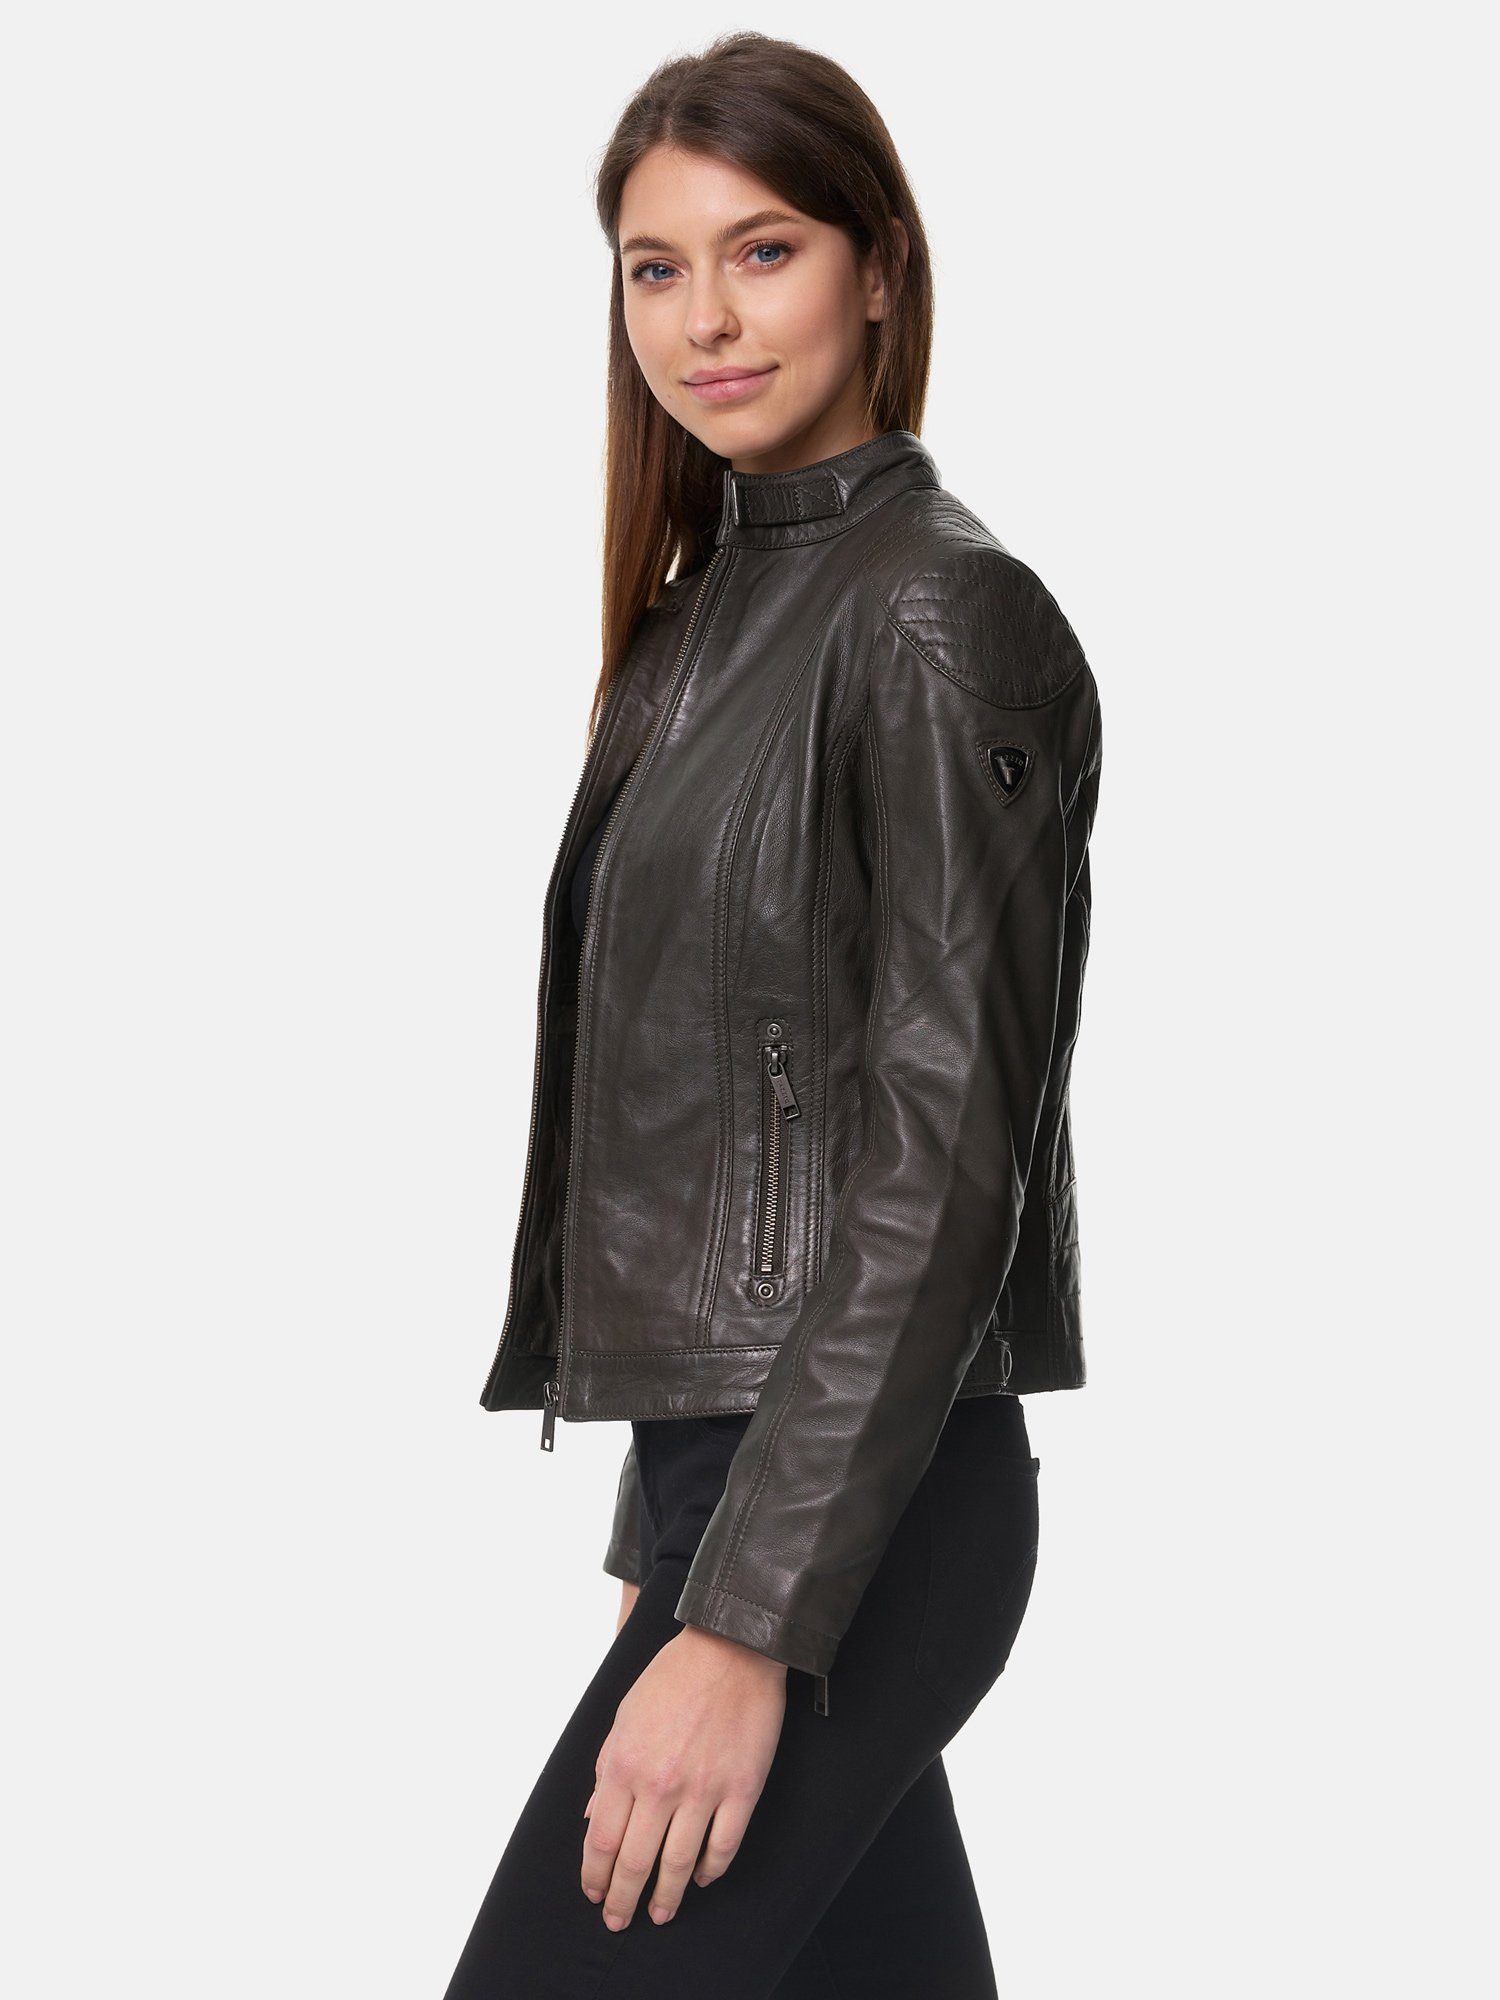 abnehmbarer khaki Lederjacke F503 Tazzio Damen Look im Leder Jacke mit Kapuze Biker